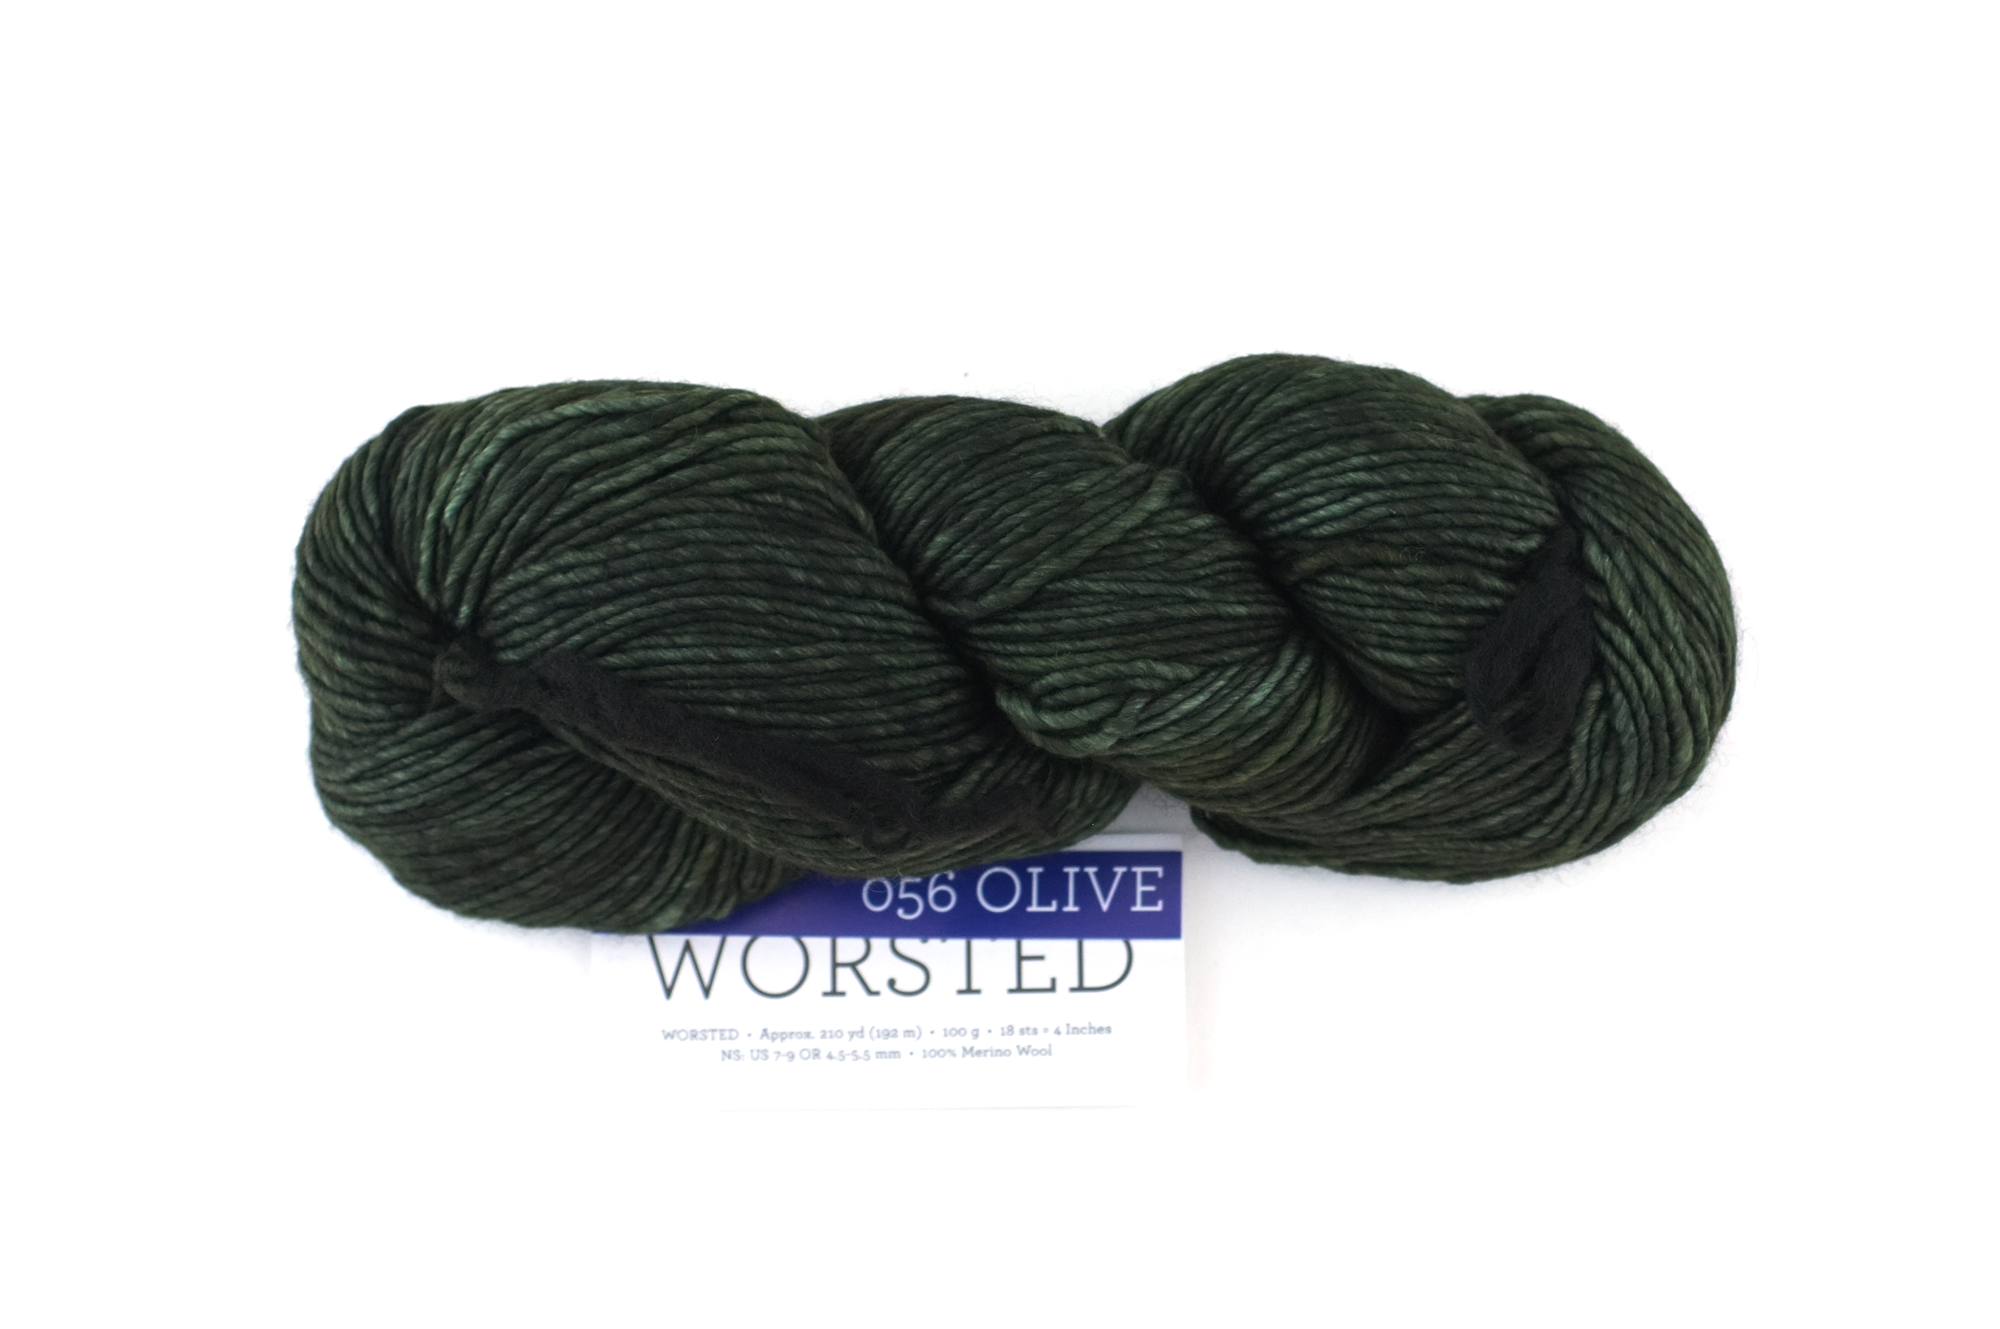 Malabrigo Worsted in color Olive, #056, Merino Wool Aran Weight